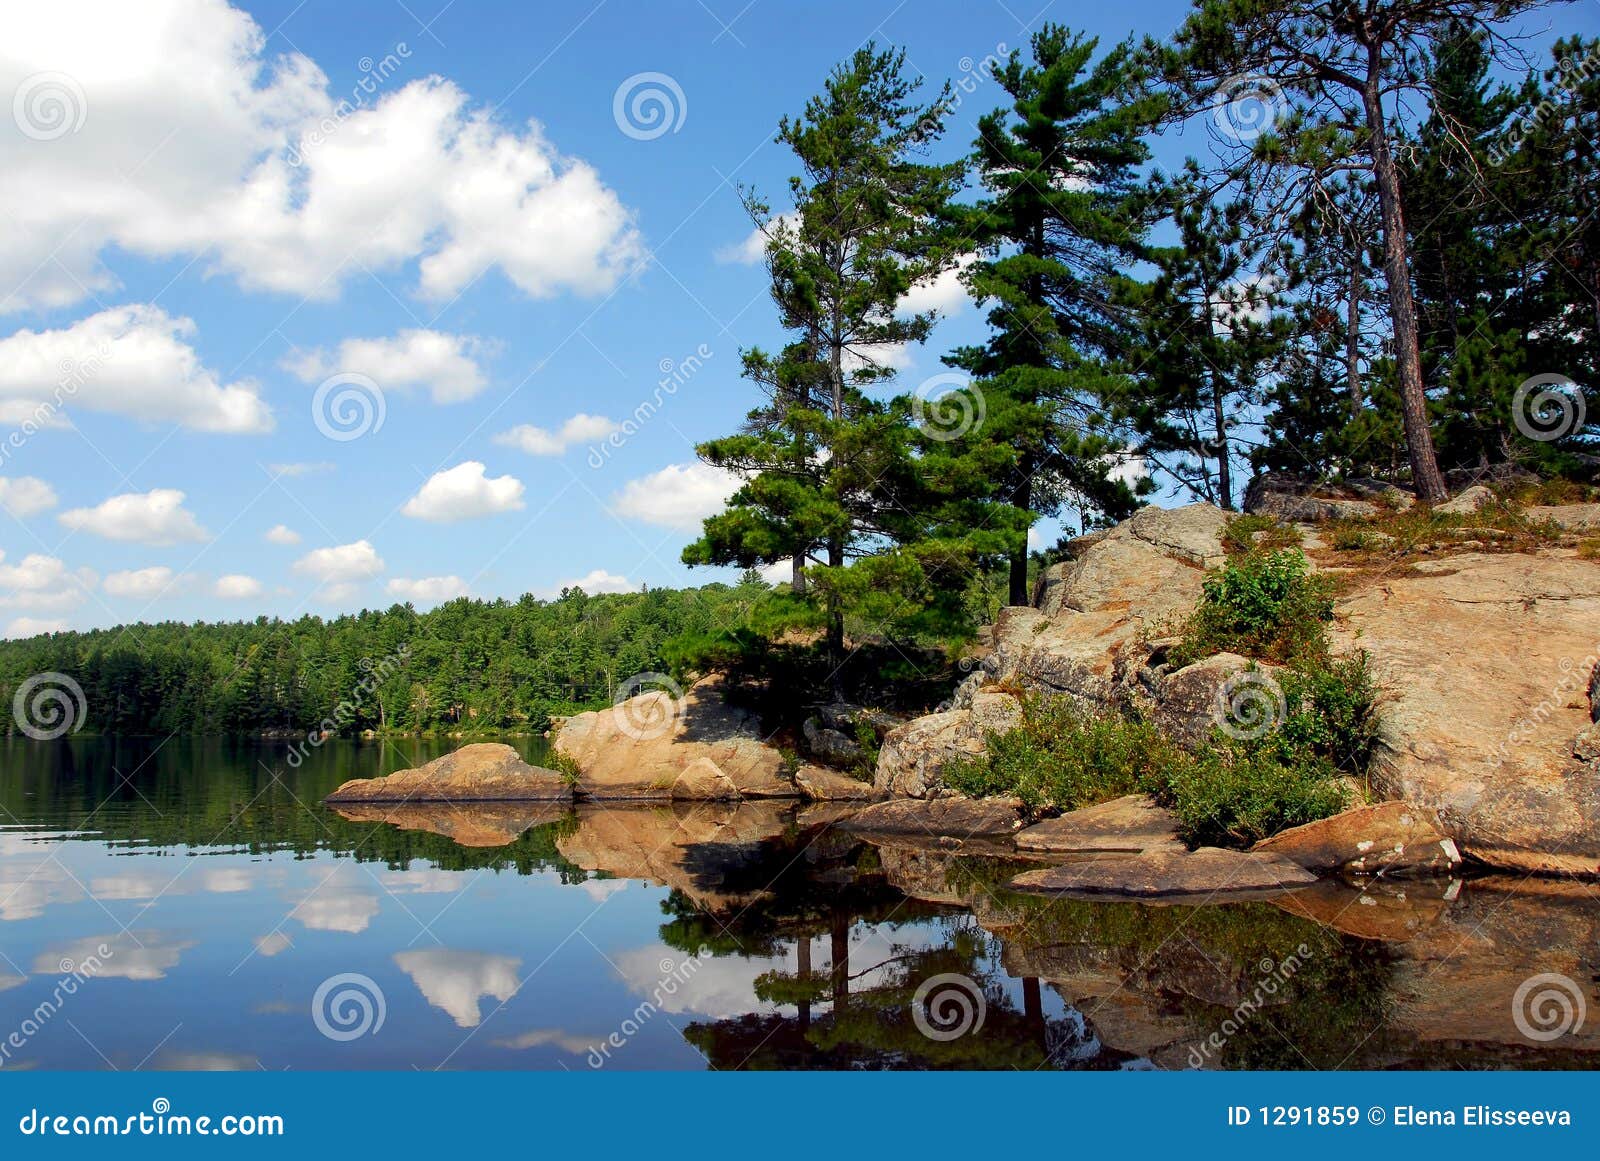 Scenic lake landscape at Algonquin provincial park, Ontario, Canada.